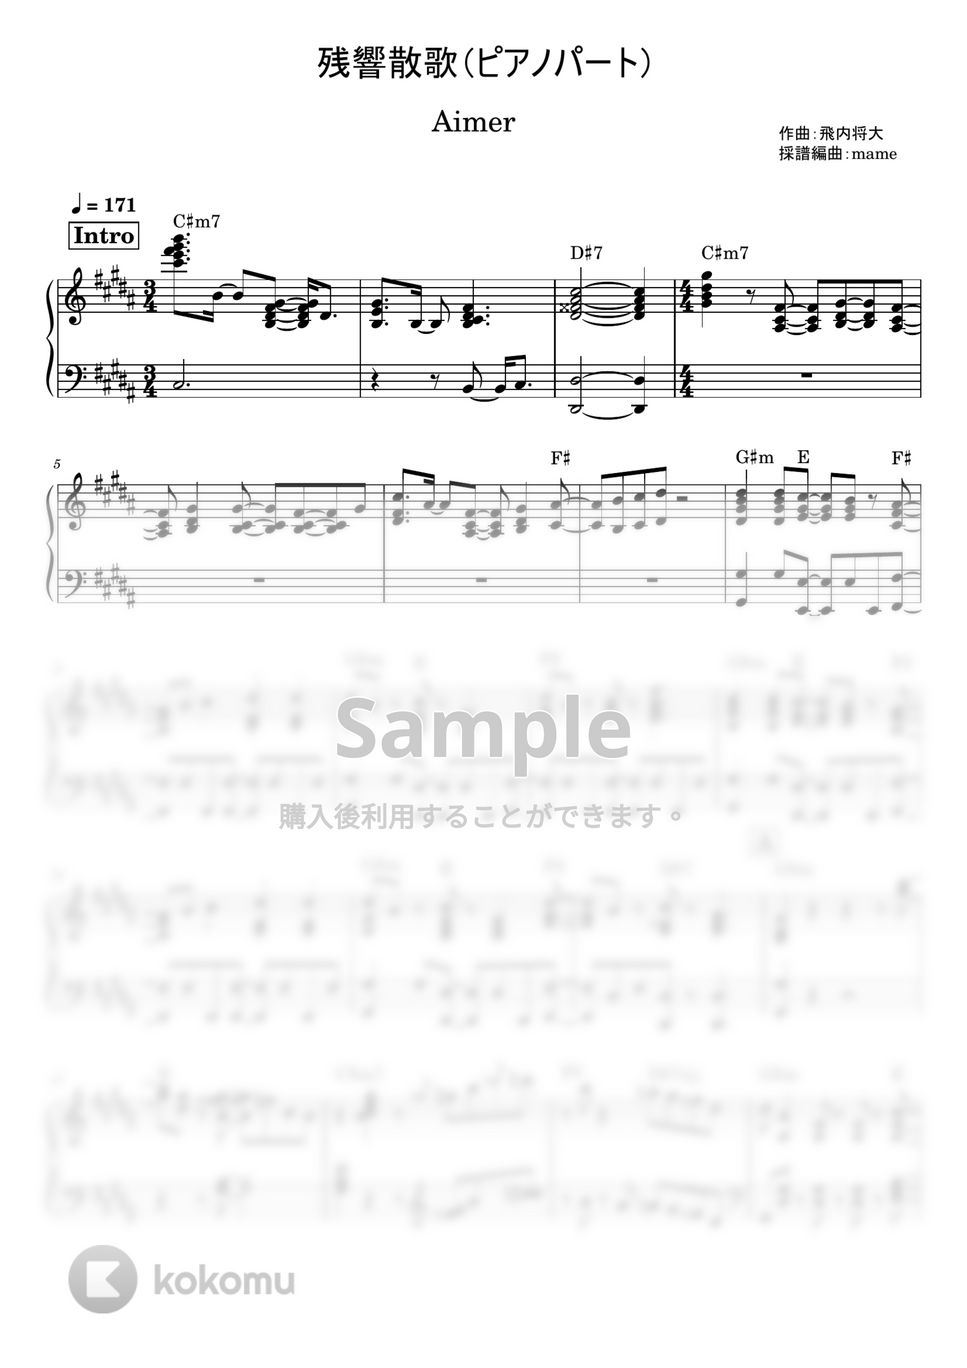 Aimer - 残響散歌 (ピアノパート) by mame